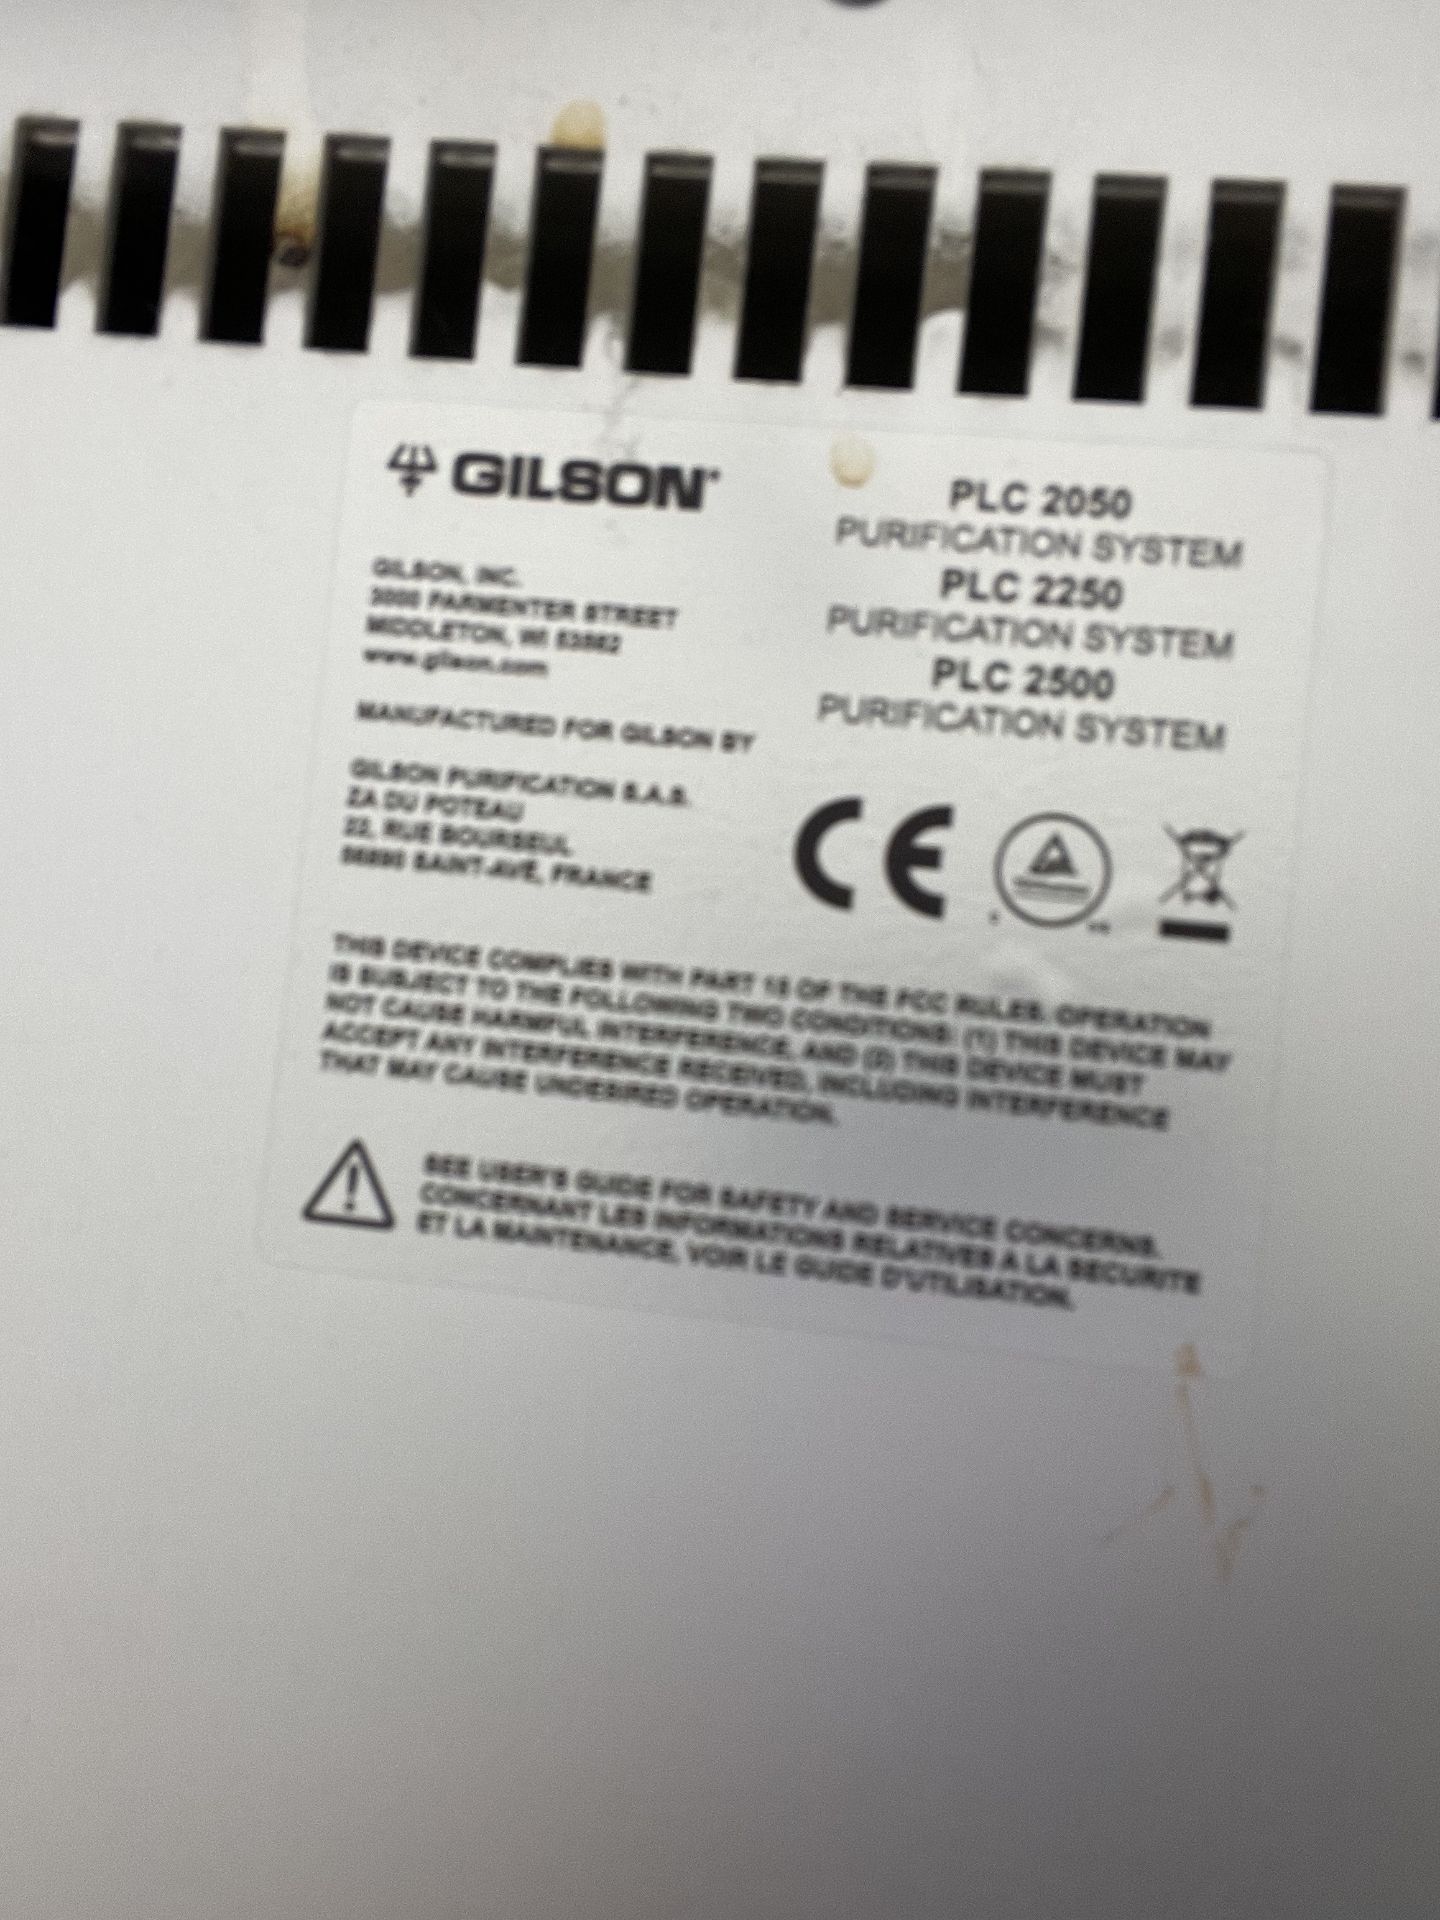 Used Gilson Preparative HPLC and Flash Chromatography System. Model PLC 2500. - Image 8 of 8